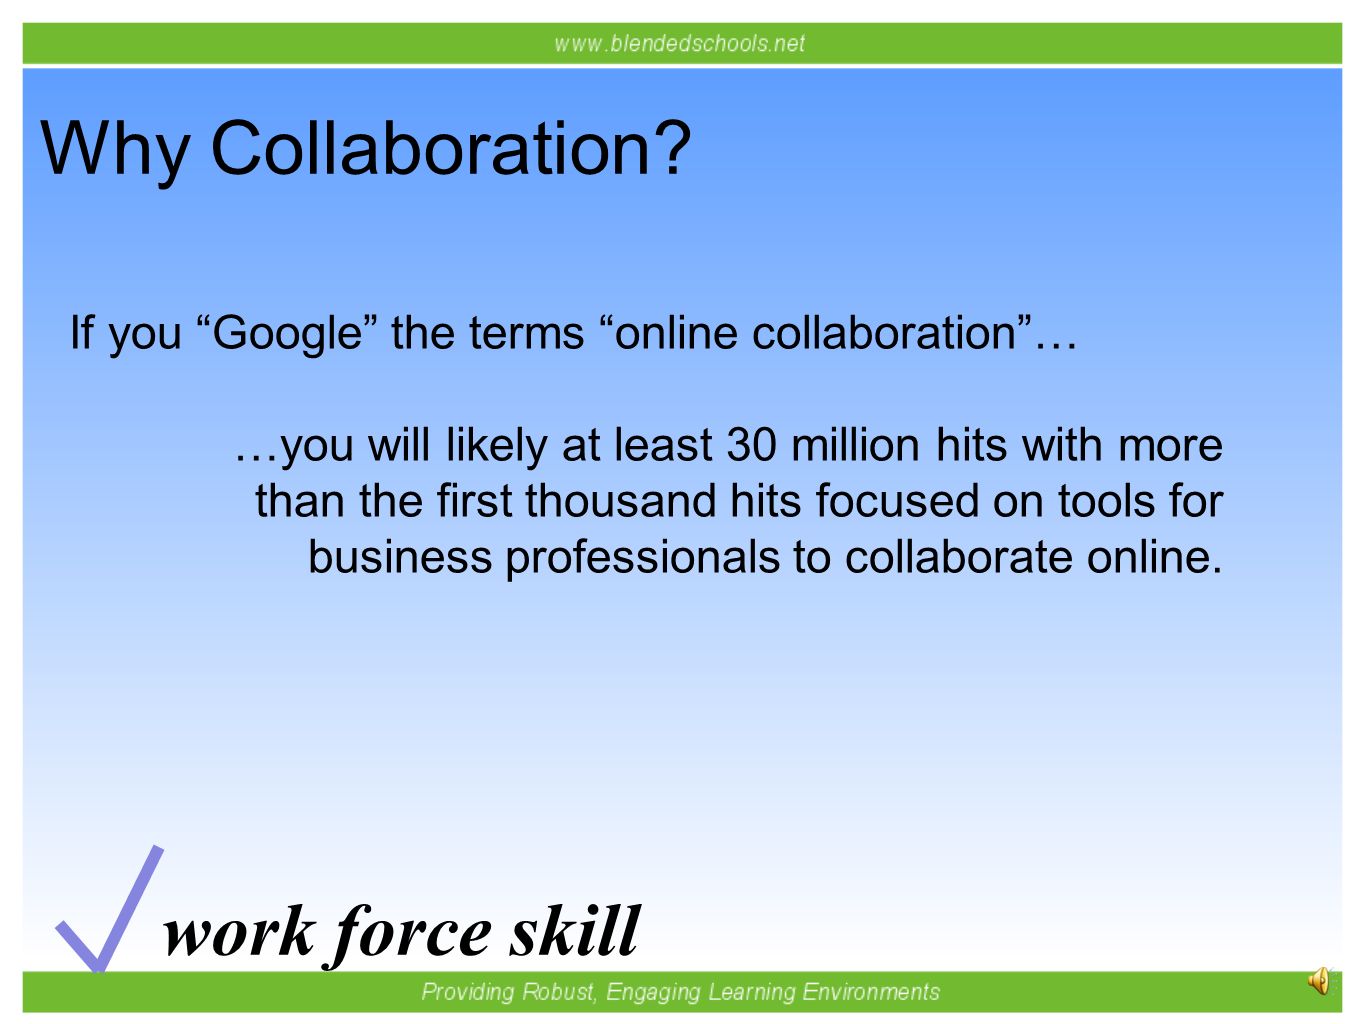 collaborative learning enhances critical thinking